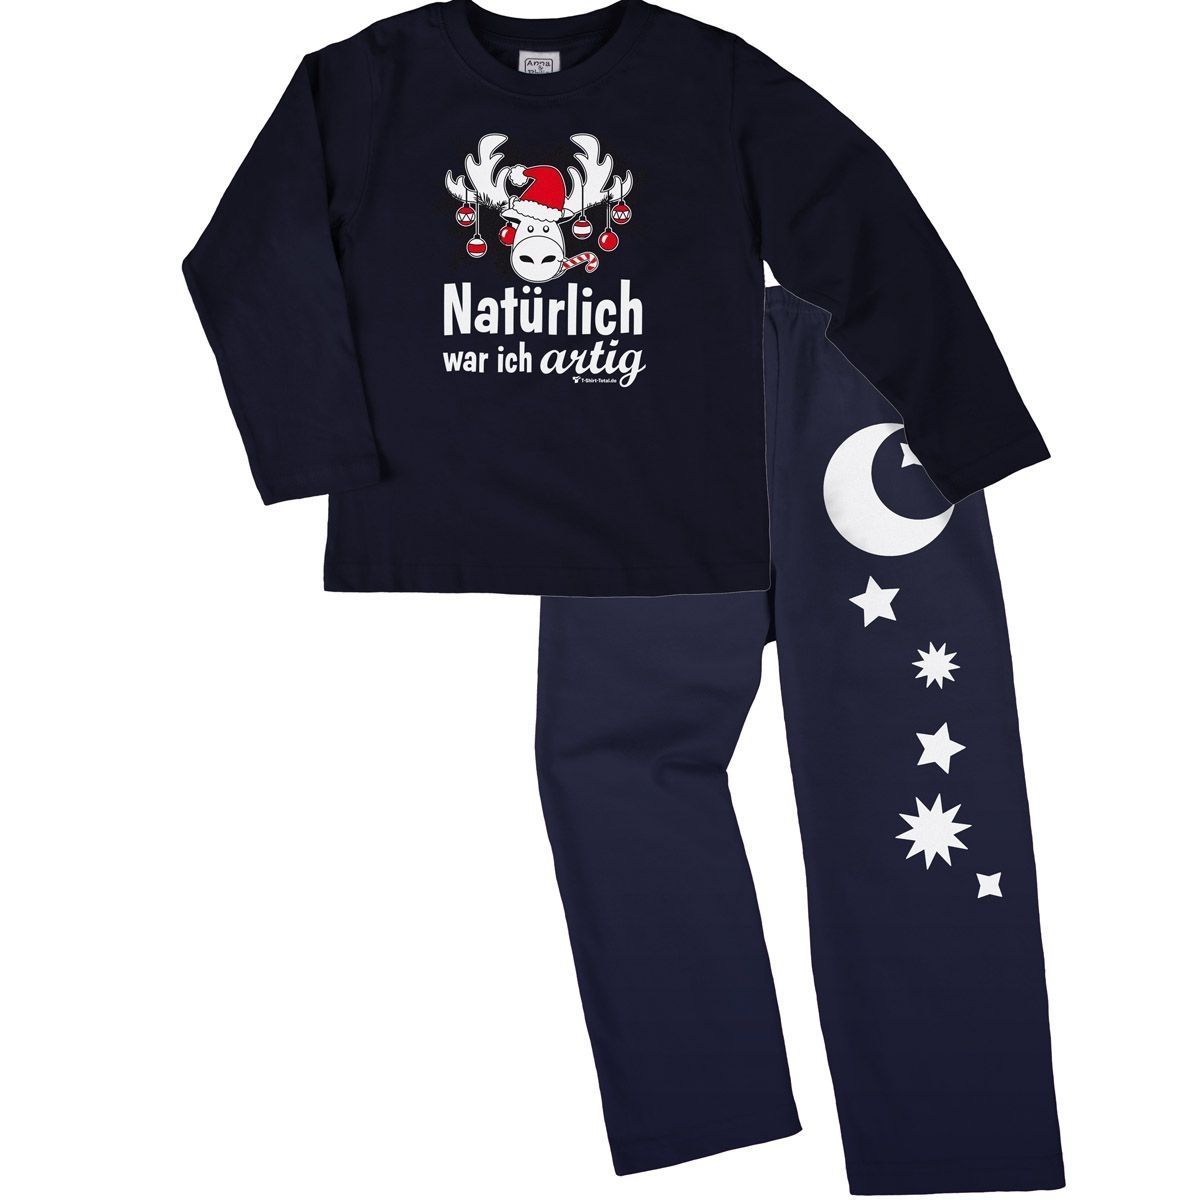 Natürlich artig Pyjama Set navy / navy 68 / 74